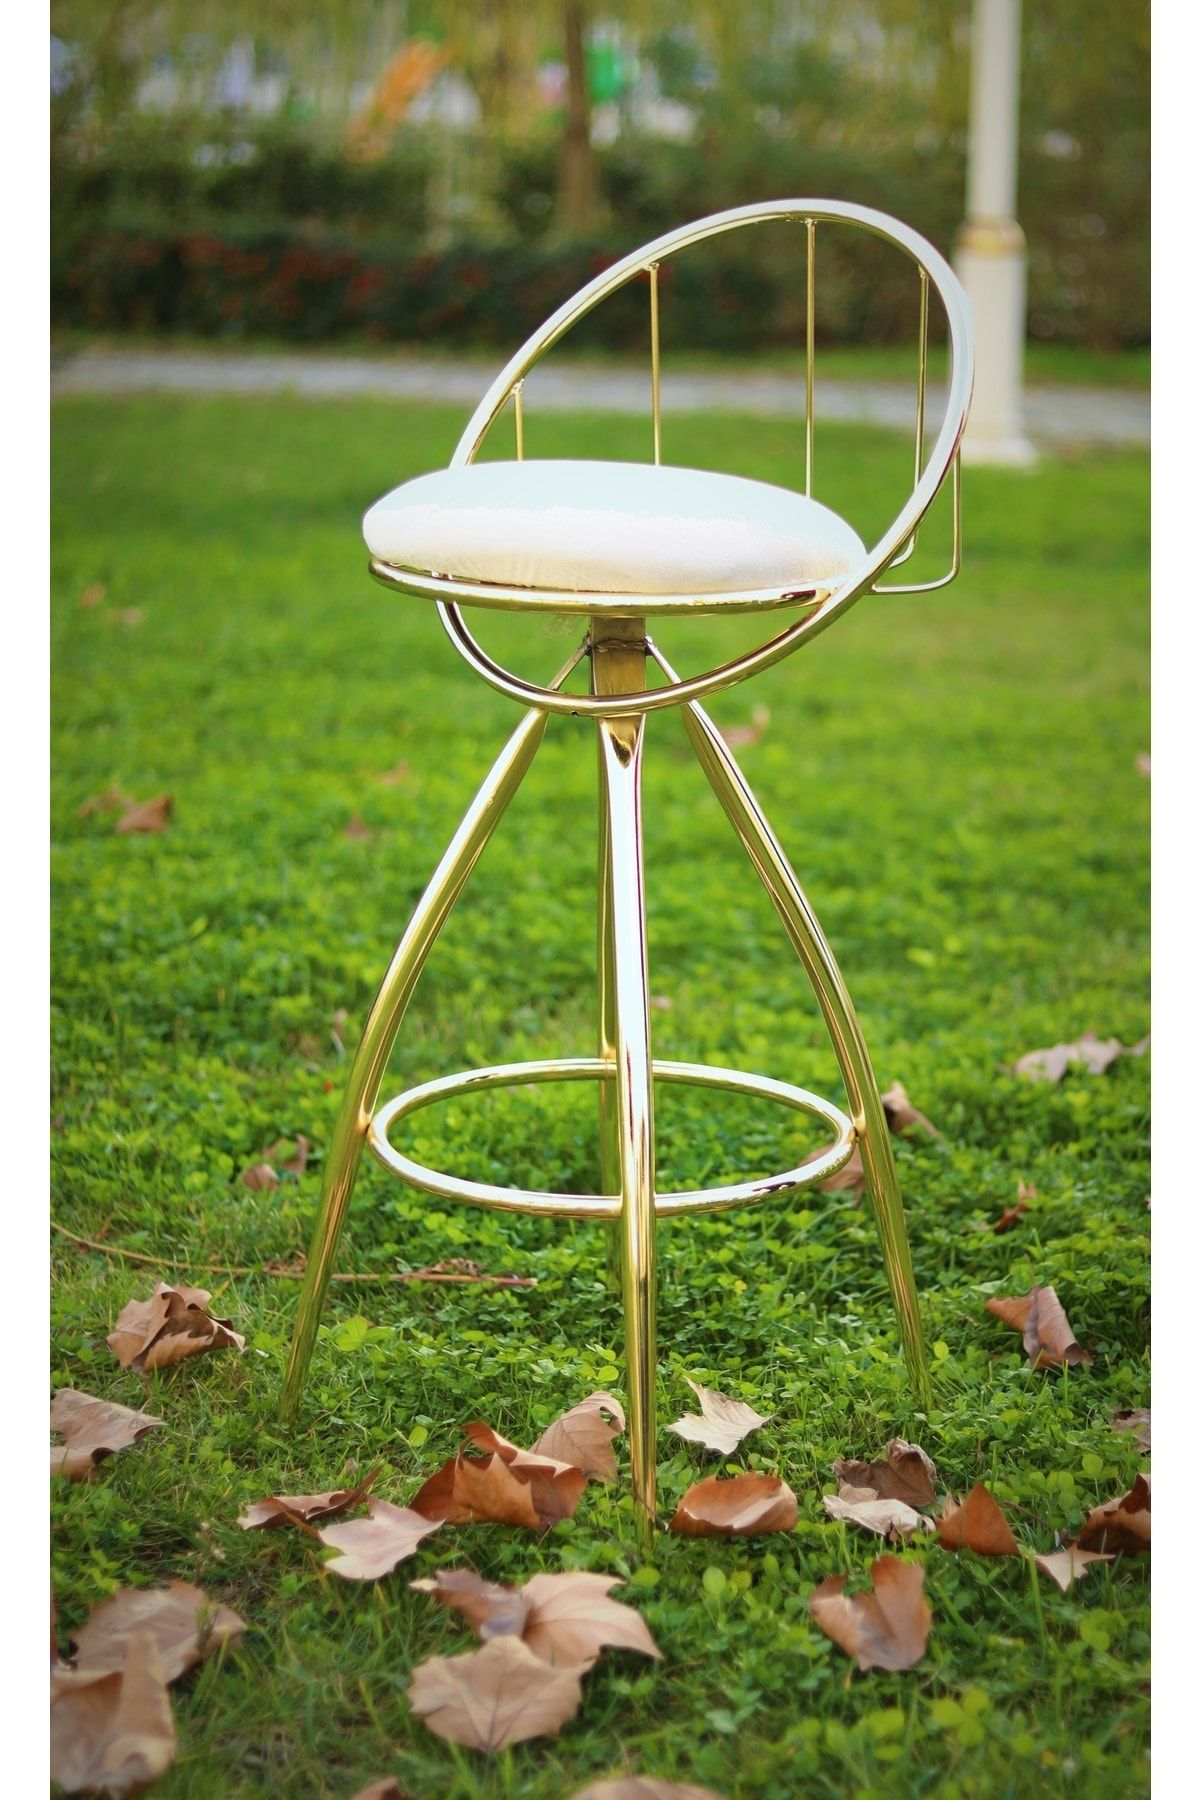 J&S QUALİTY Parlak Metalik Altın Renk Sandalye 65 cm